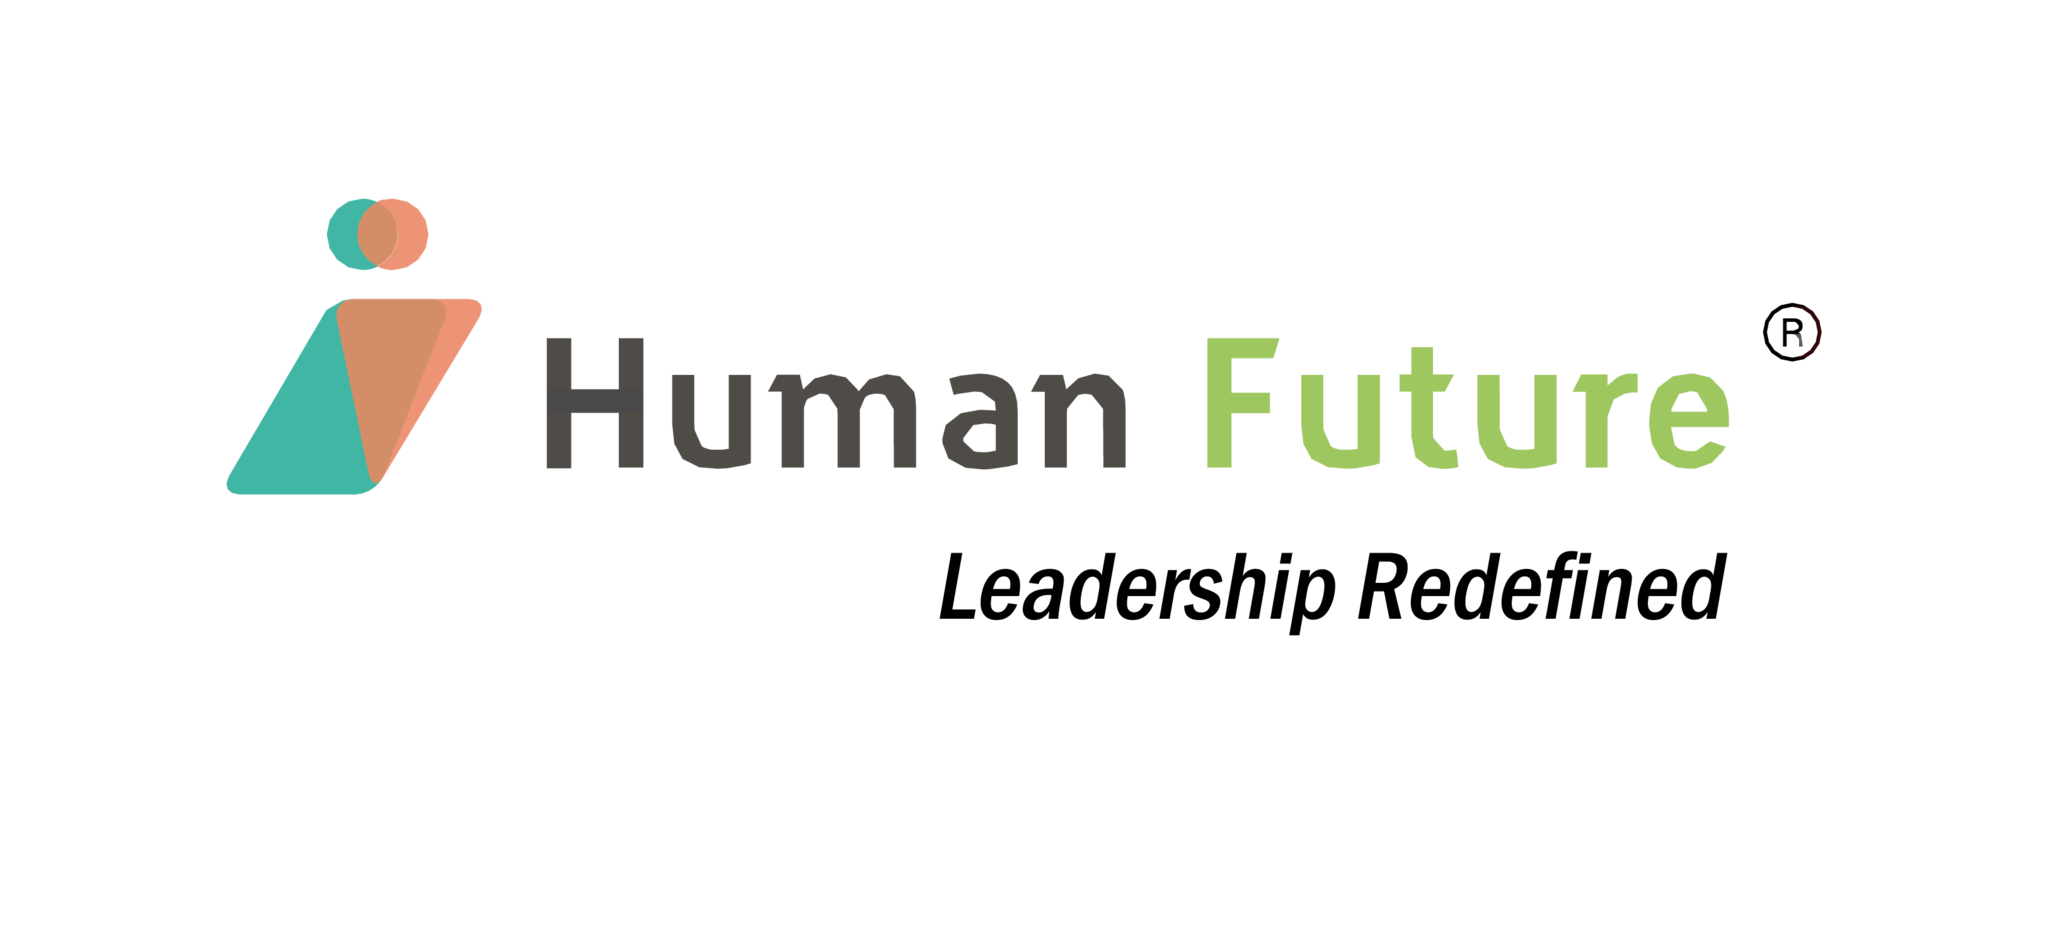 Human future